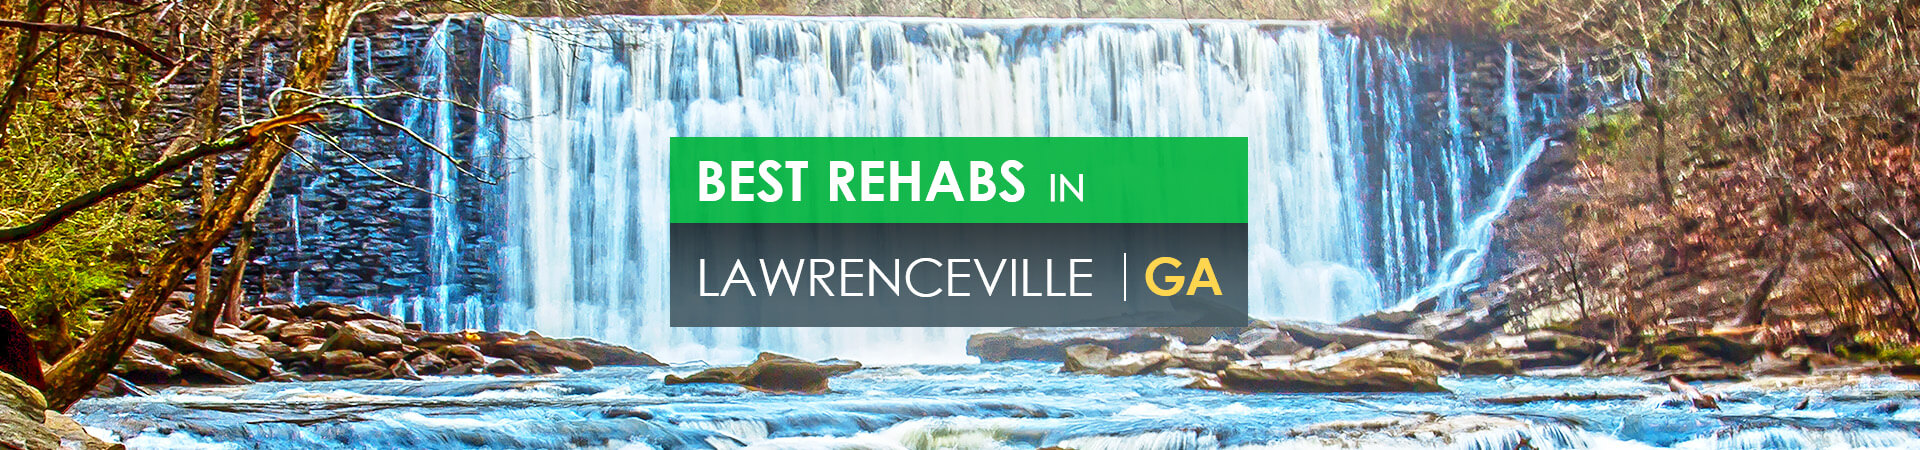 Best rehabs in Lawrenceville, GA